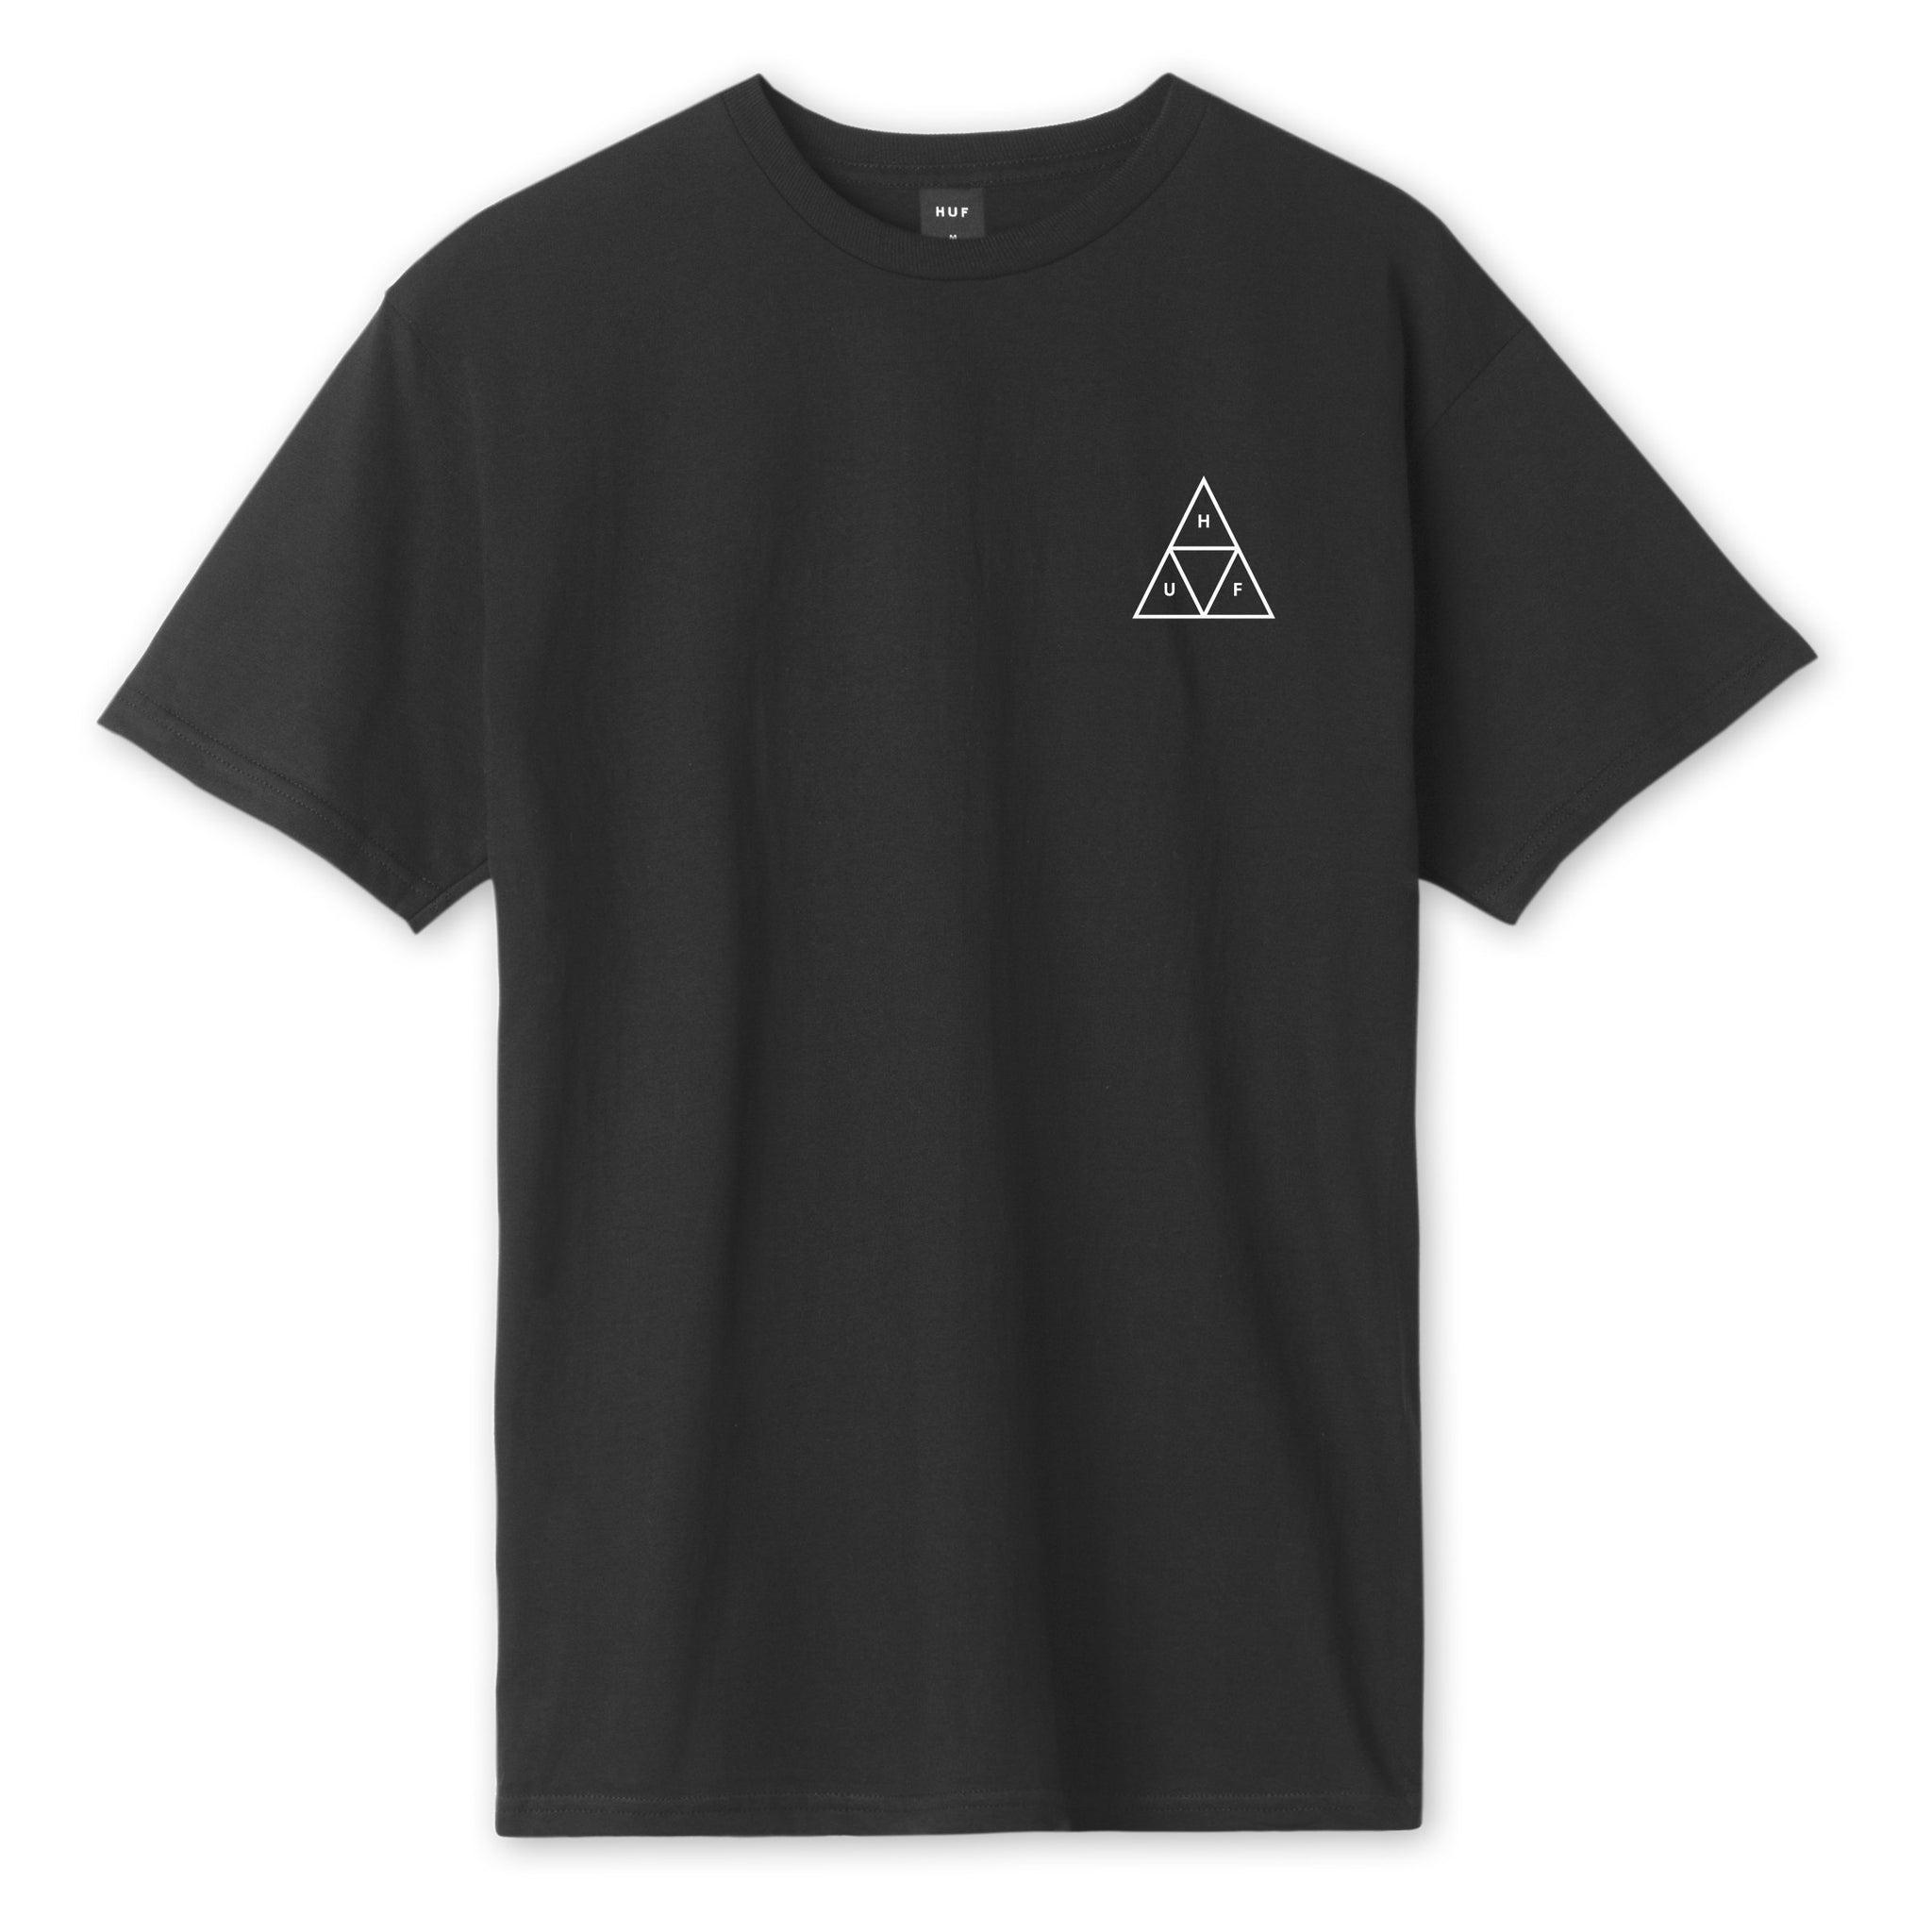 Huf 男士黑色t恤 Ts00726-black